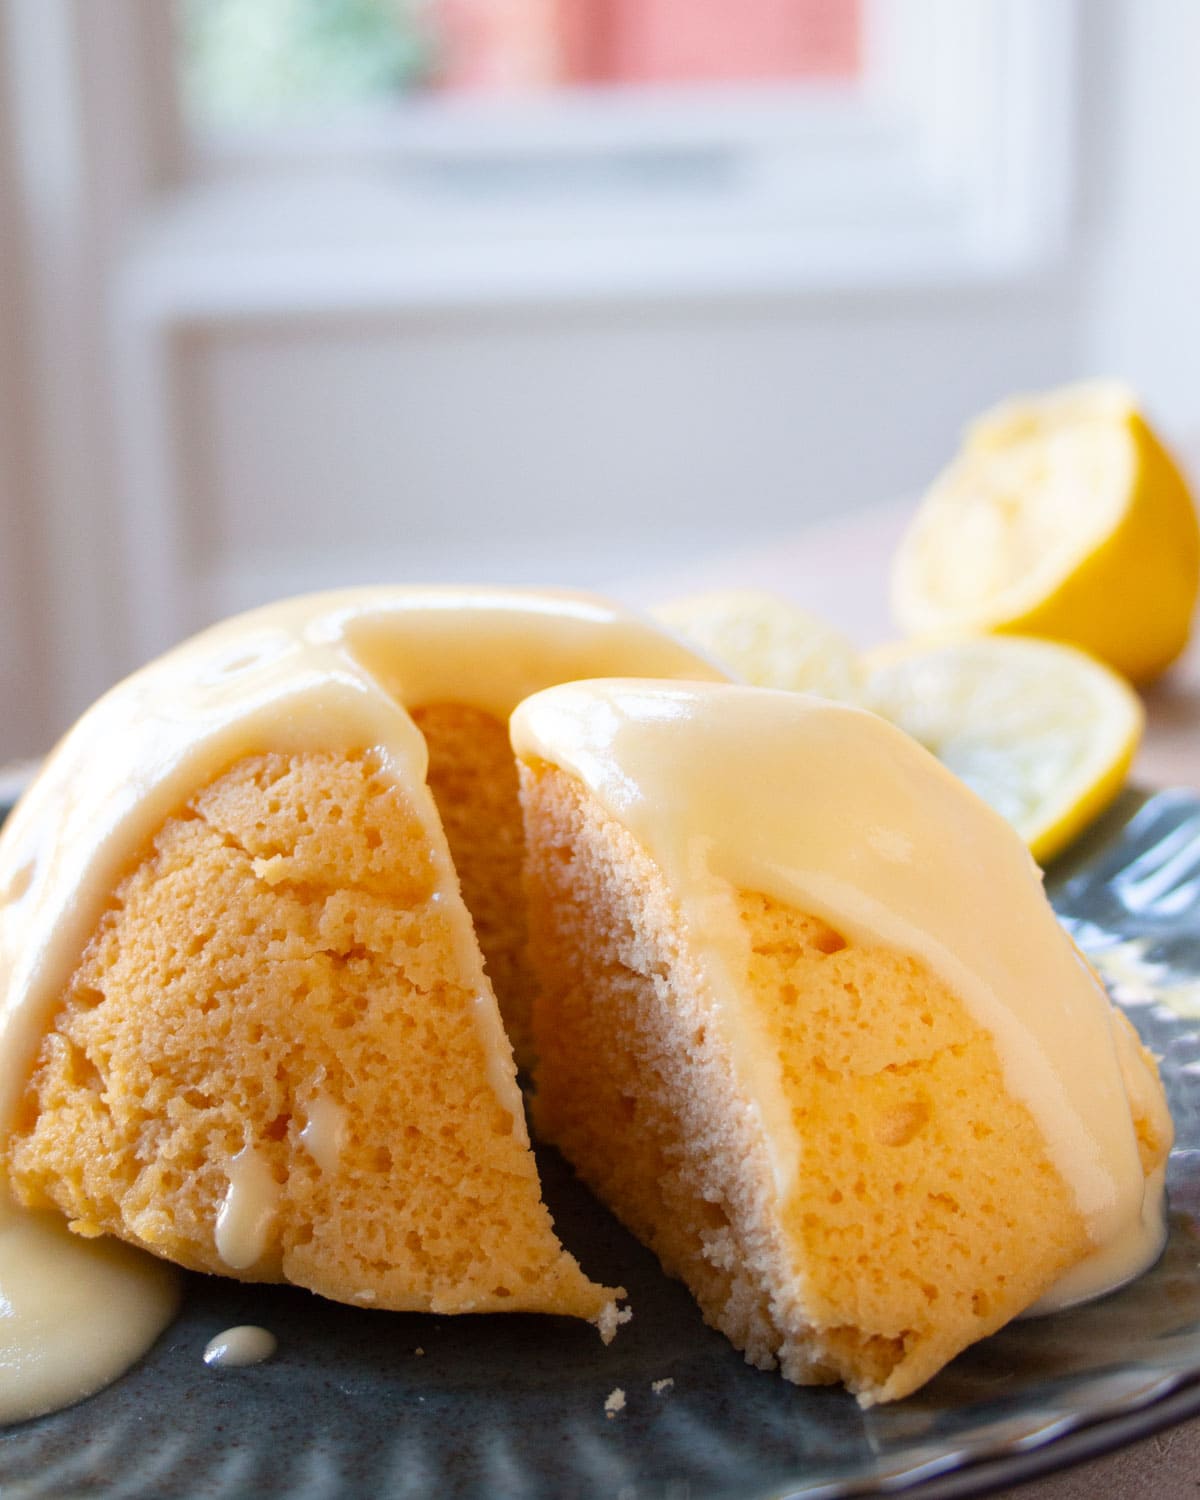 A slice cut out of a lemon cake.